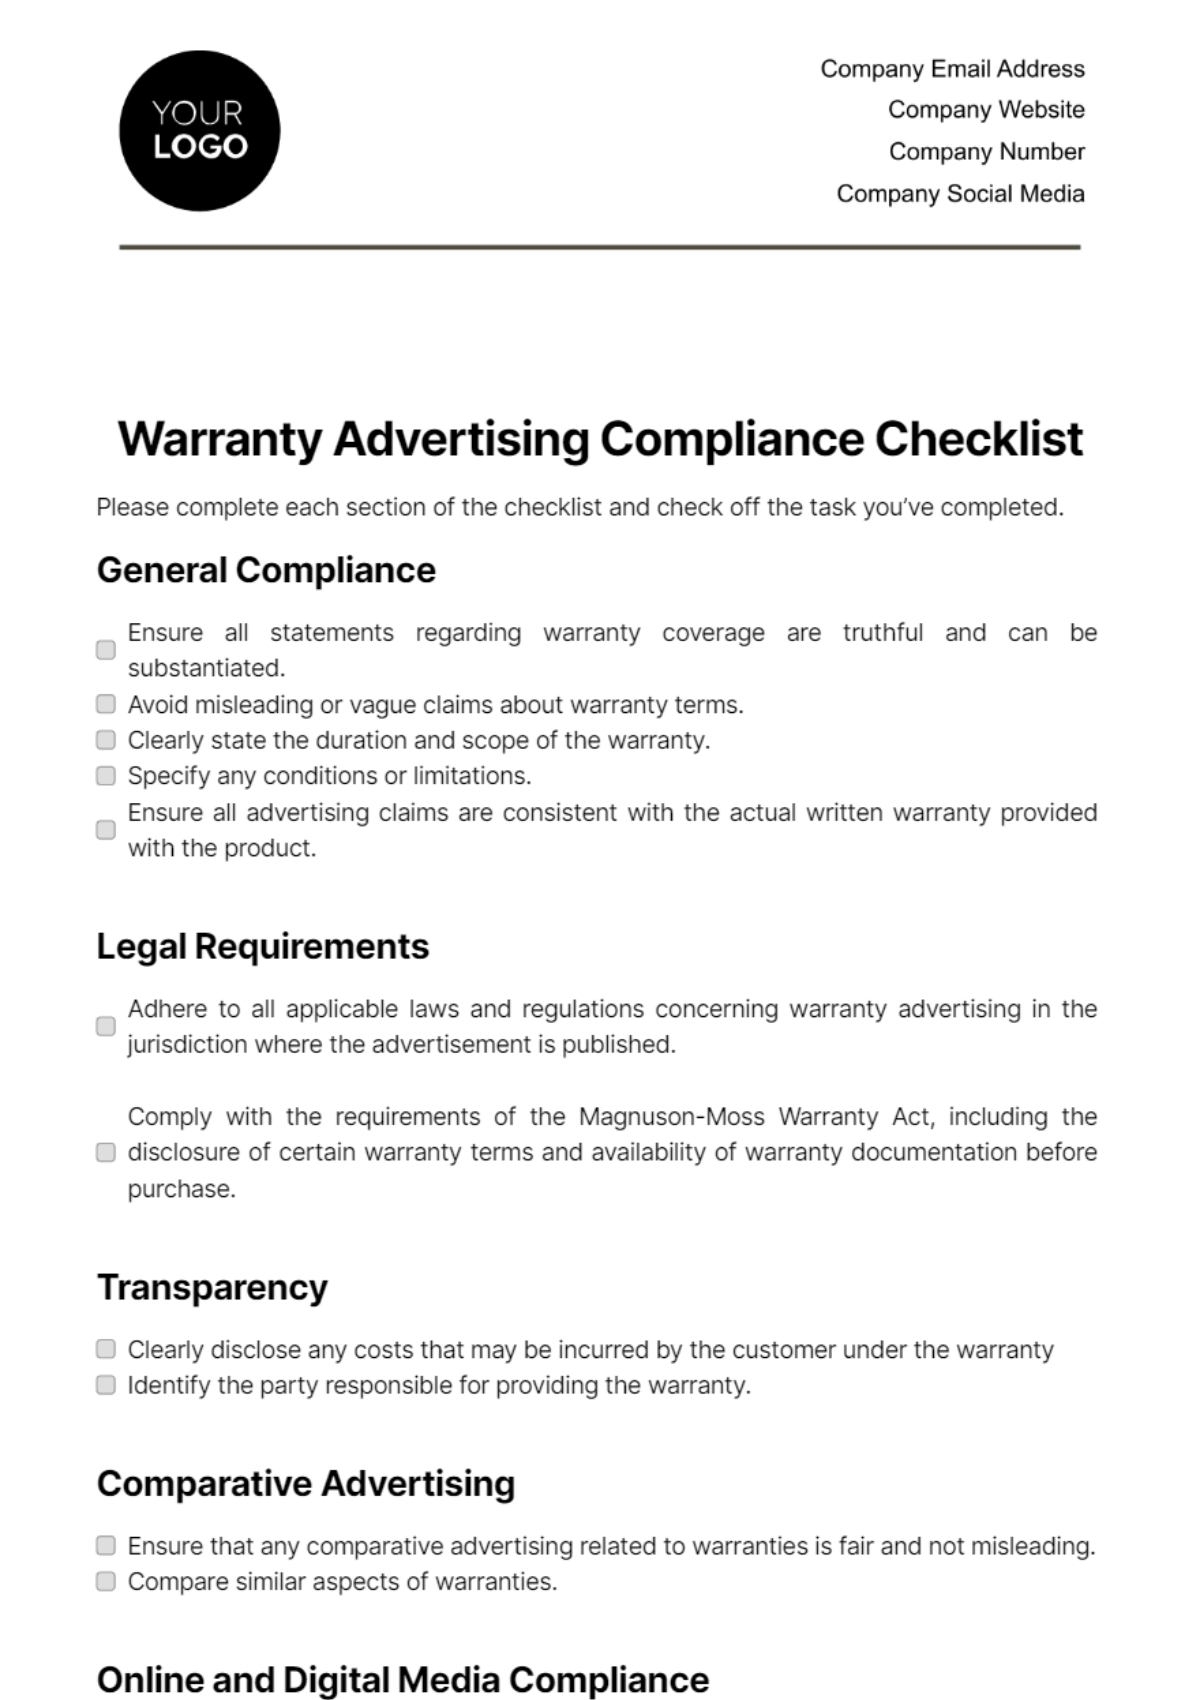 Warranty Advertising Compliance Checklist Template